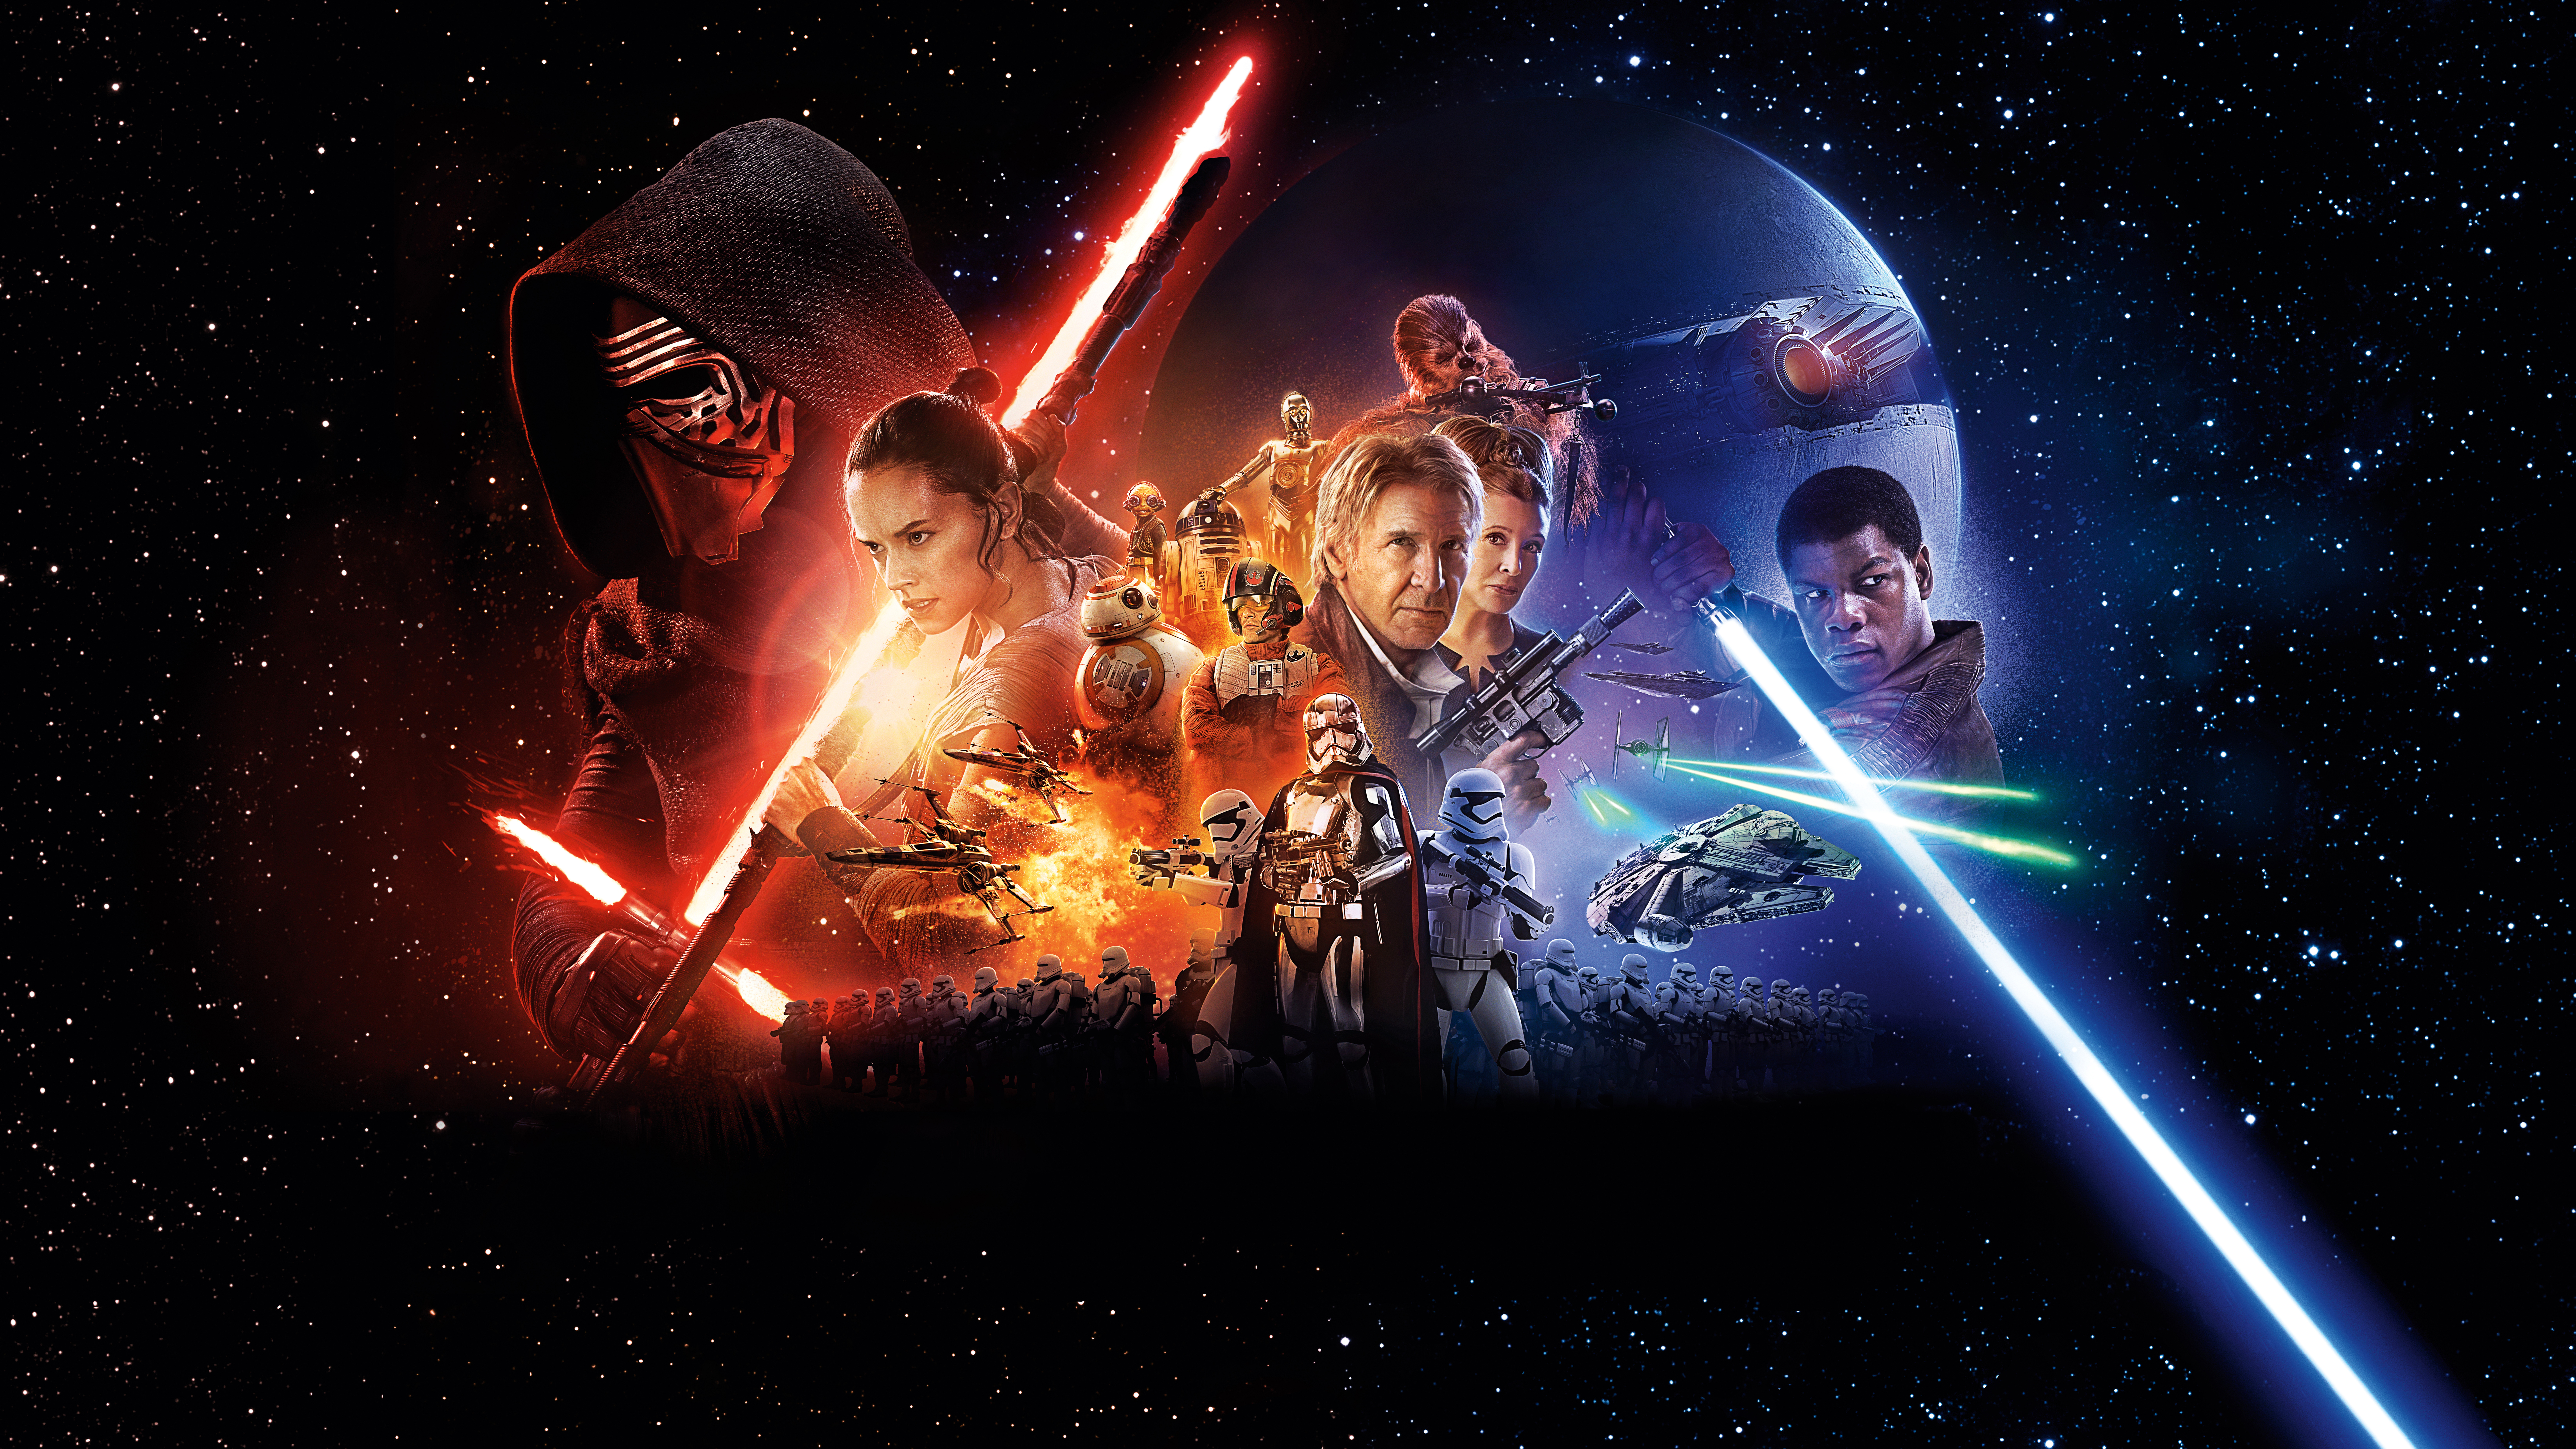 Movie Star Wars Episode VII: The Force Awakens 8k Ultra HD Wallpaper